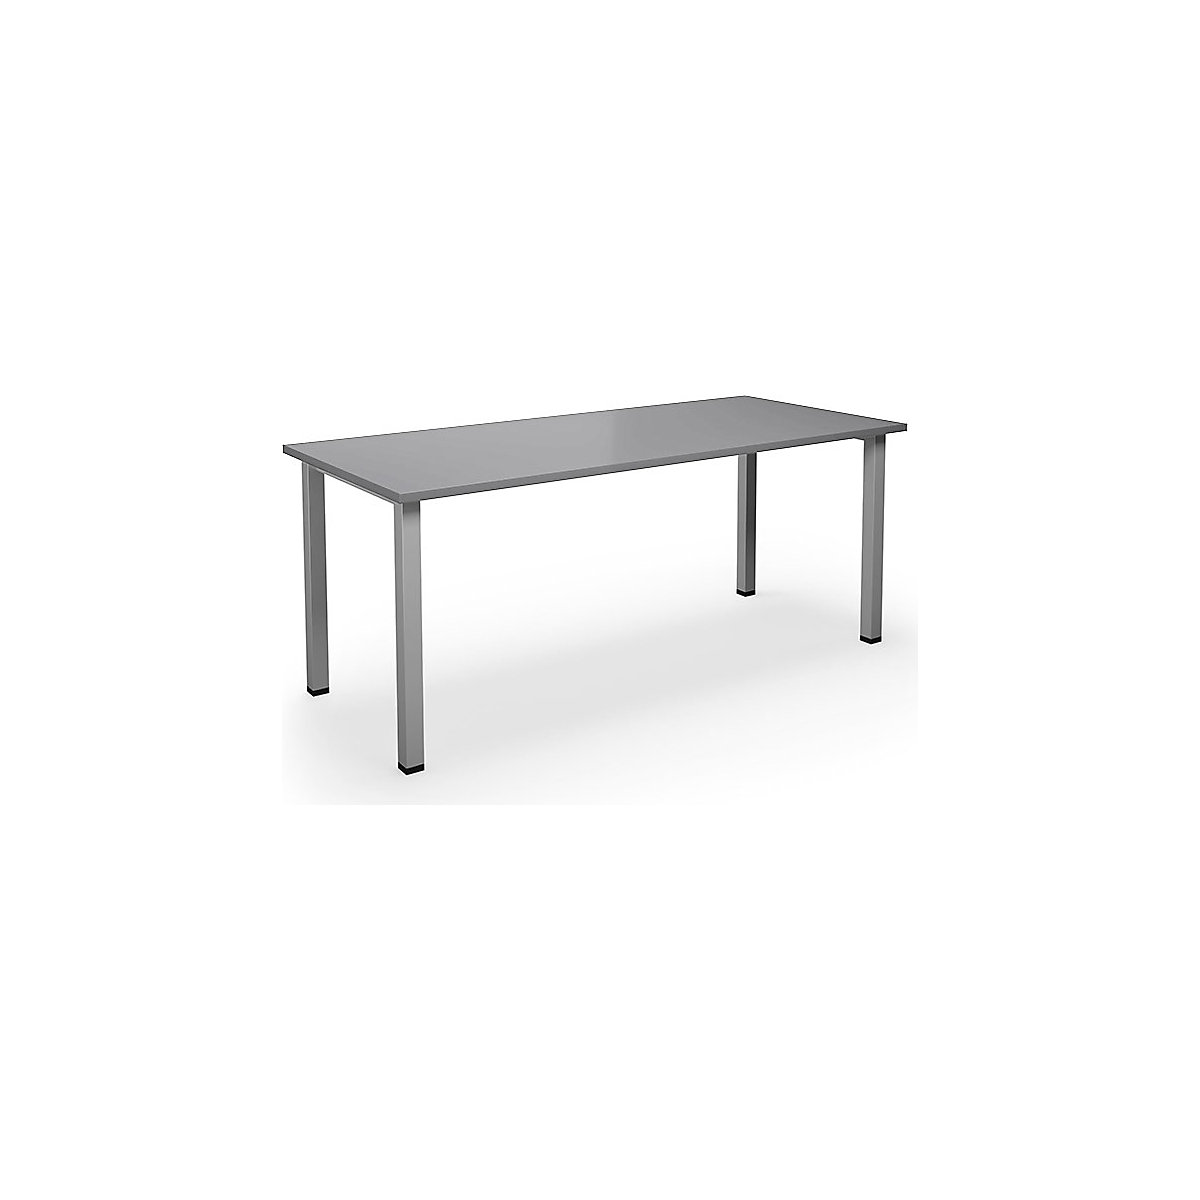 DUO-U multi-purpose desk, straight tabletop, WxD 1800 x 800 mm, light grey, silver-6